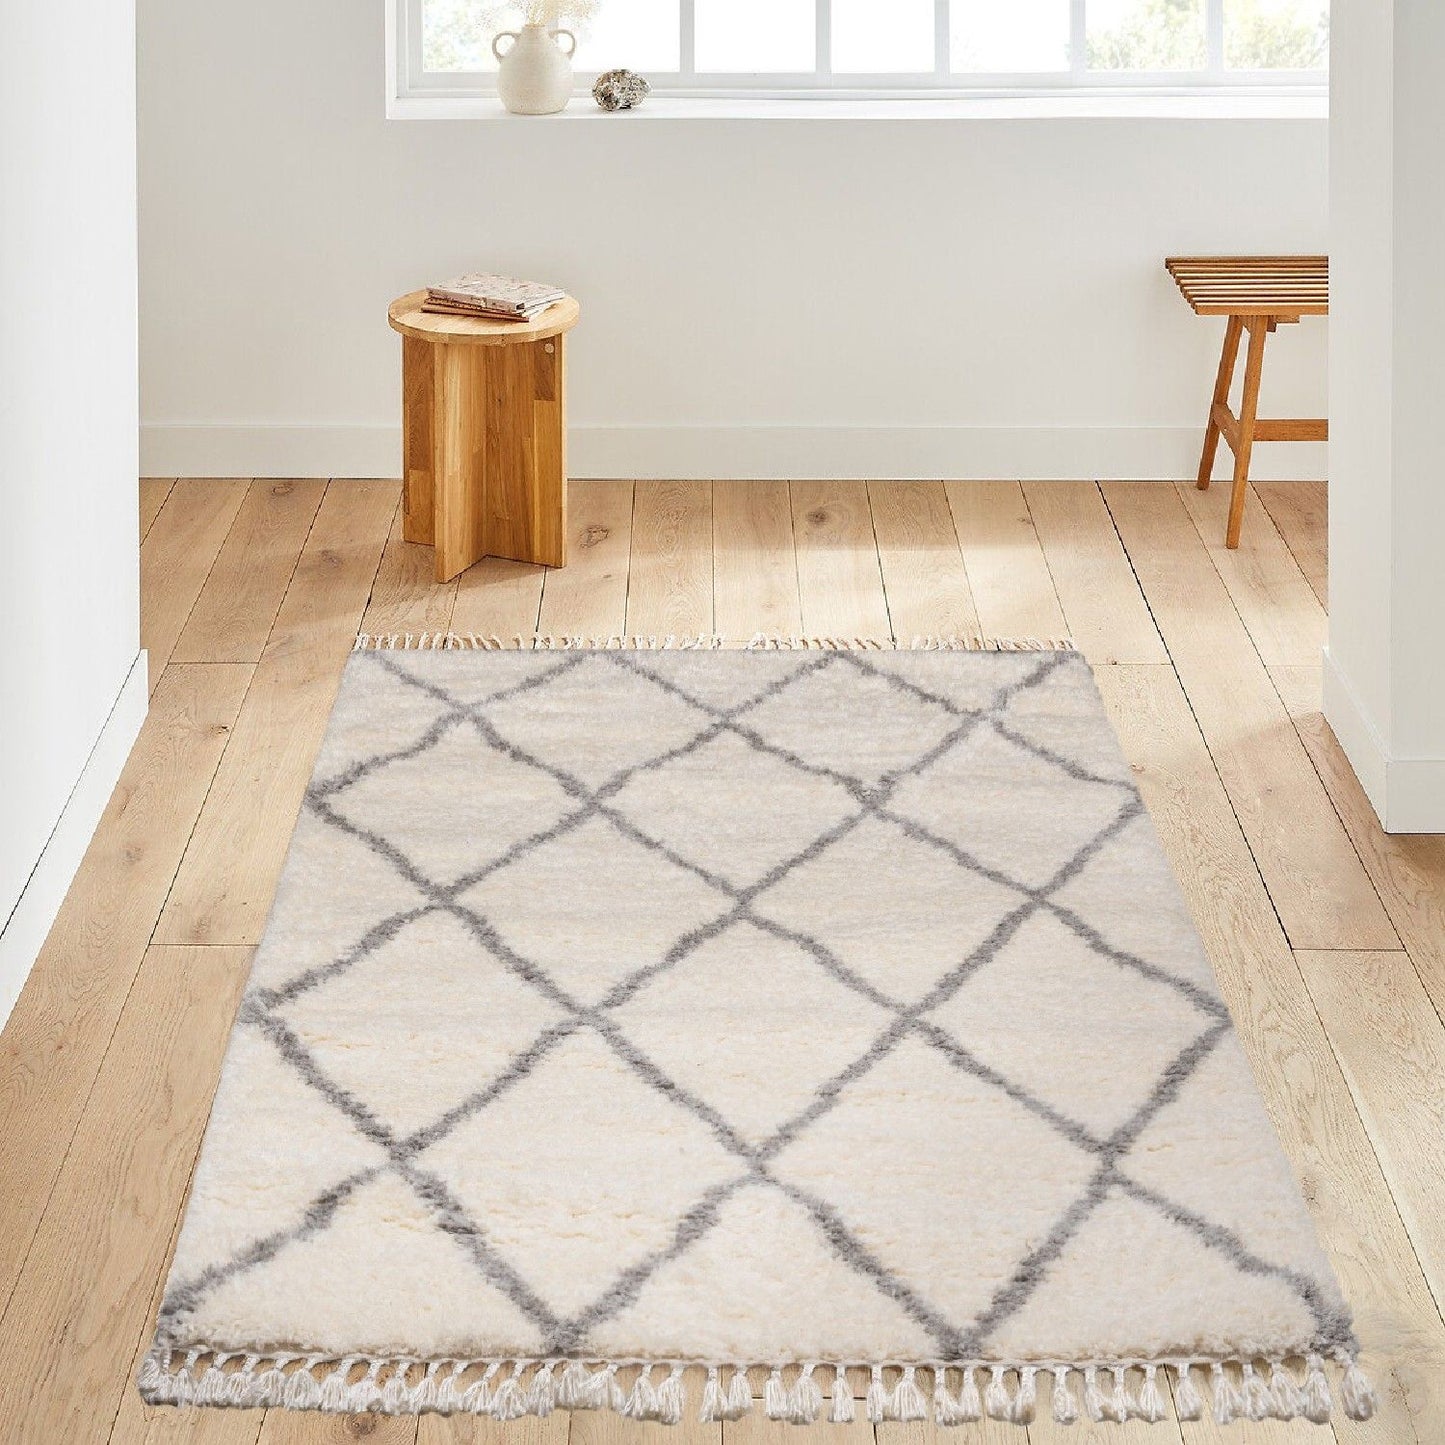 Post 3204 - Hall Carpet (100 x 150)